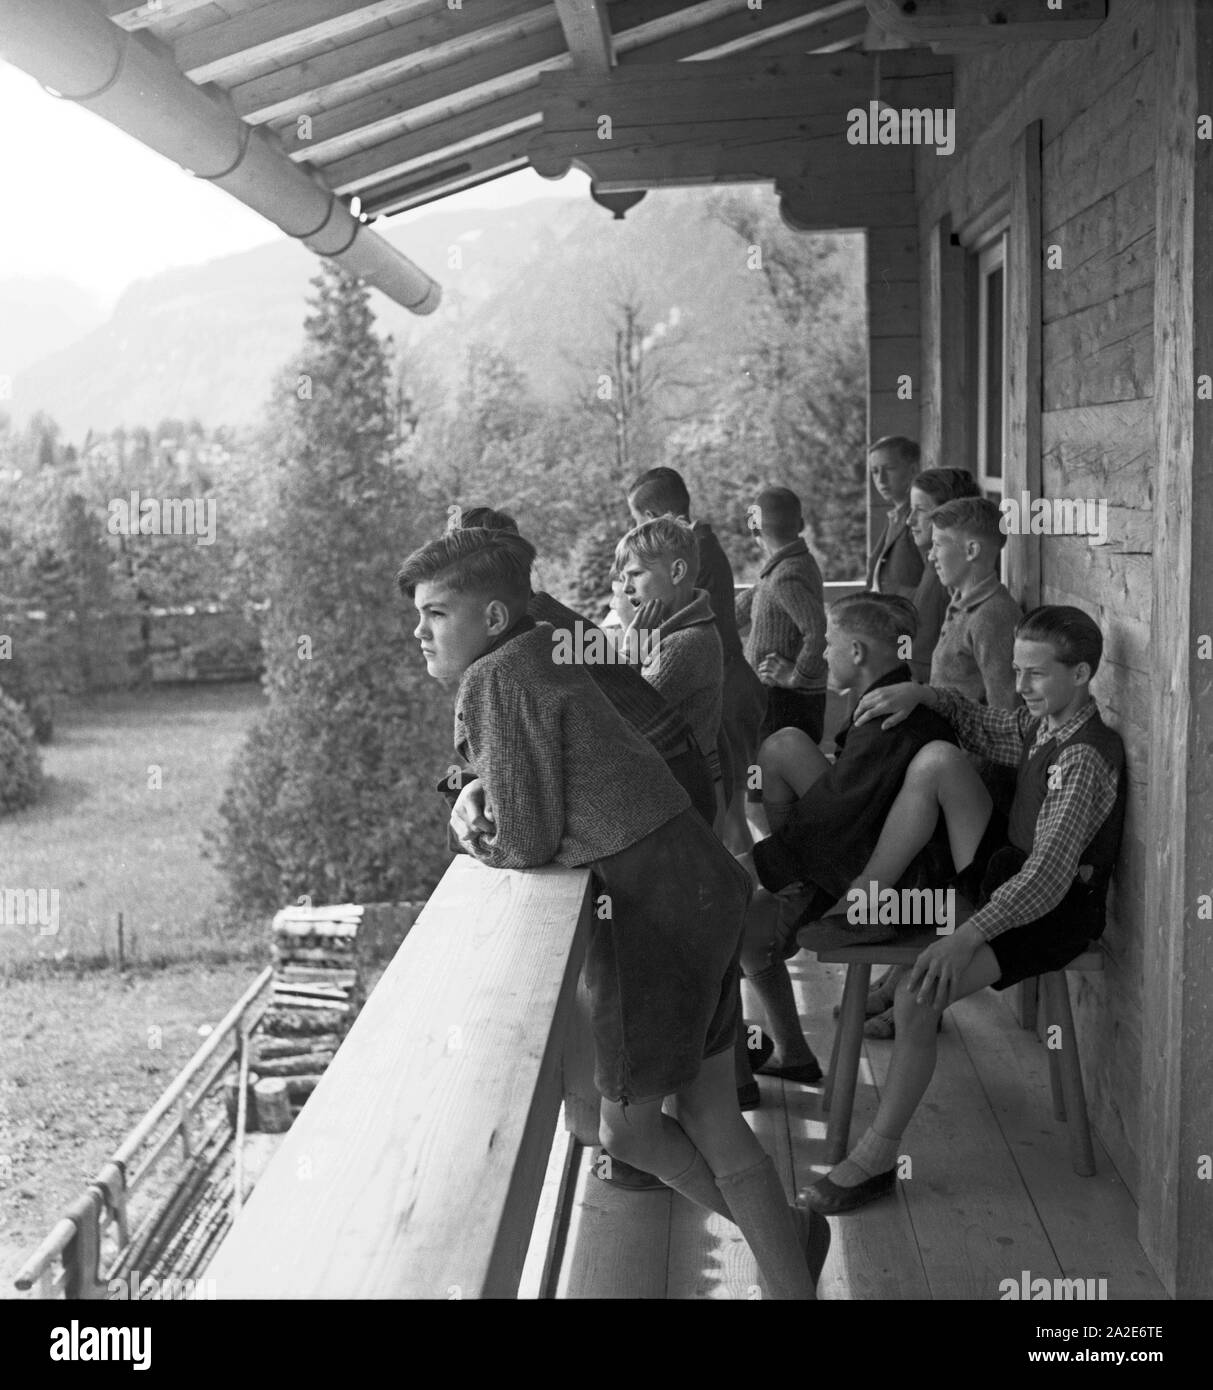 Jungen auf dem Balkon der Adolf-Hitler-Jugendherberge en Berchtesgaden, Deutschland 1930er Jahre. Los chicos en el balcón de la Adolf Hiter youth hostel en Berchtesgaden, Alemania 1930. Foto de stock